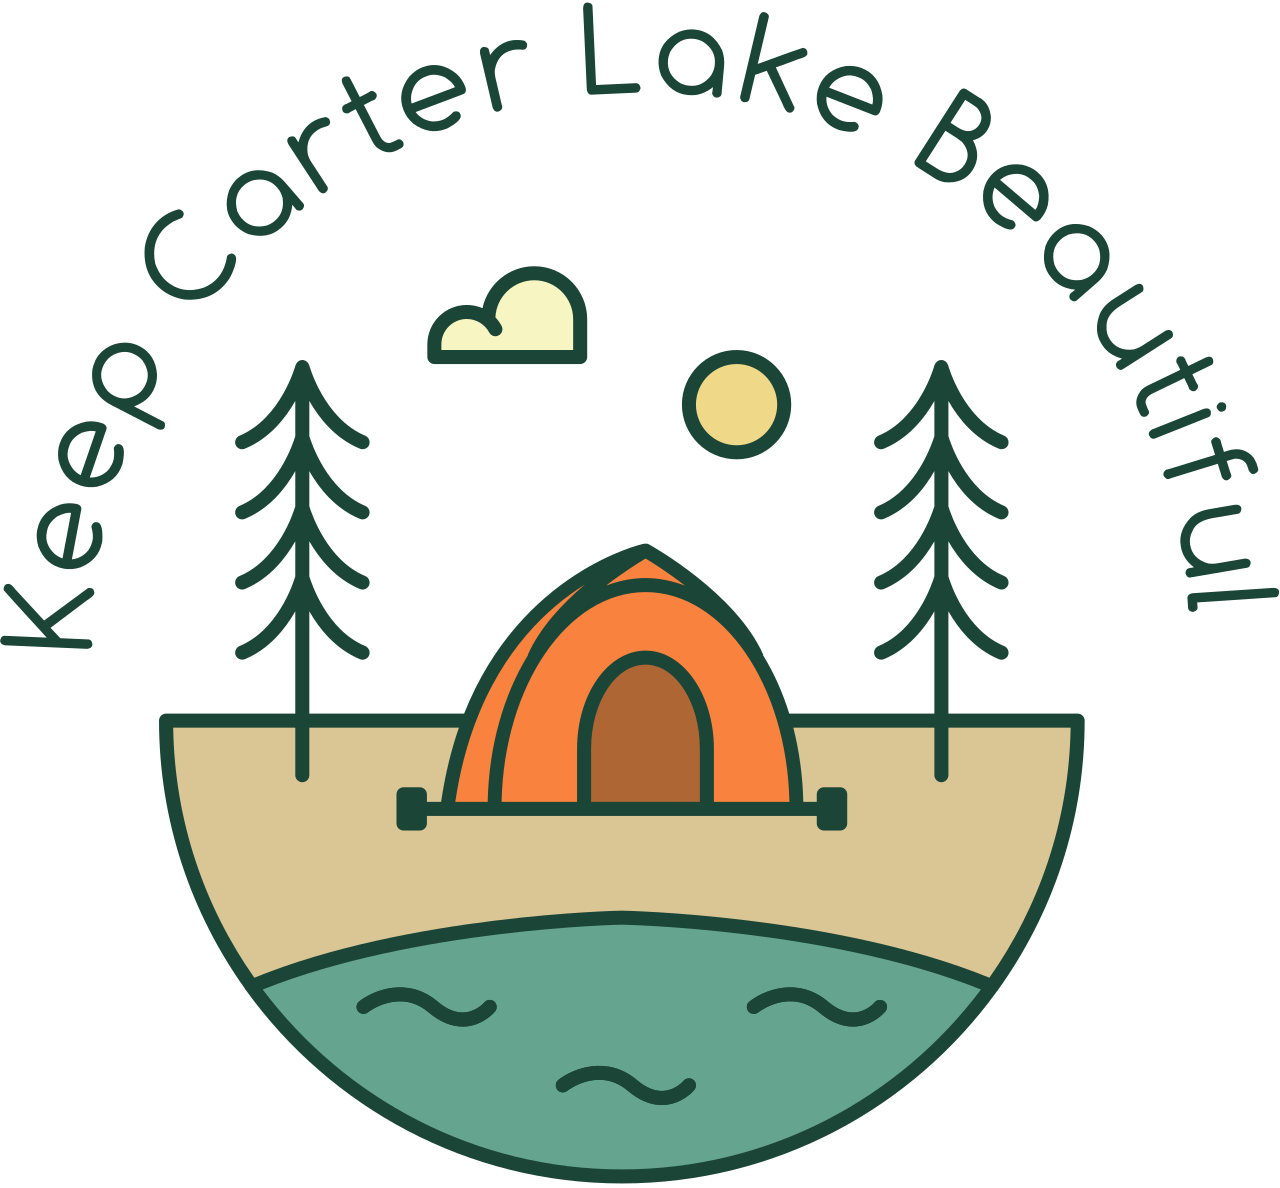 Keep Carter Lake Beautiful 's logo